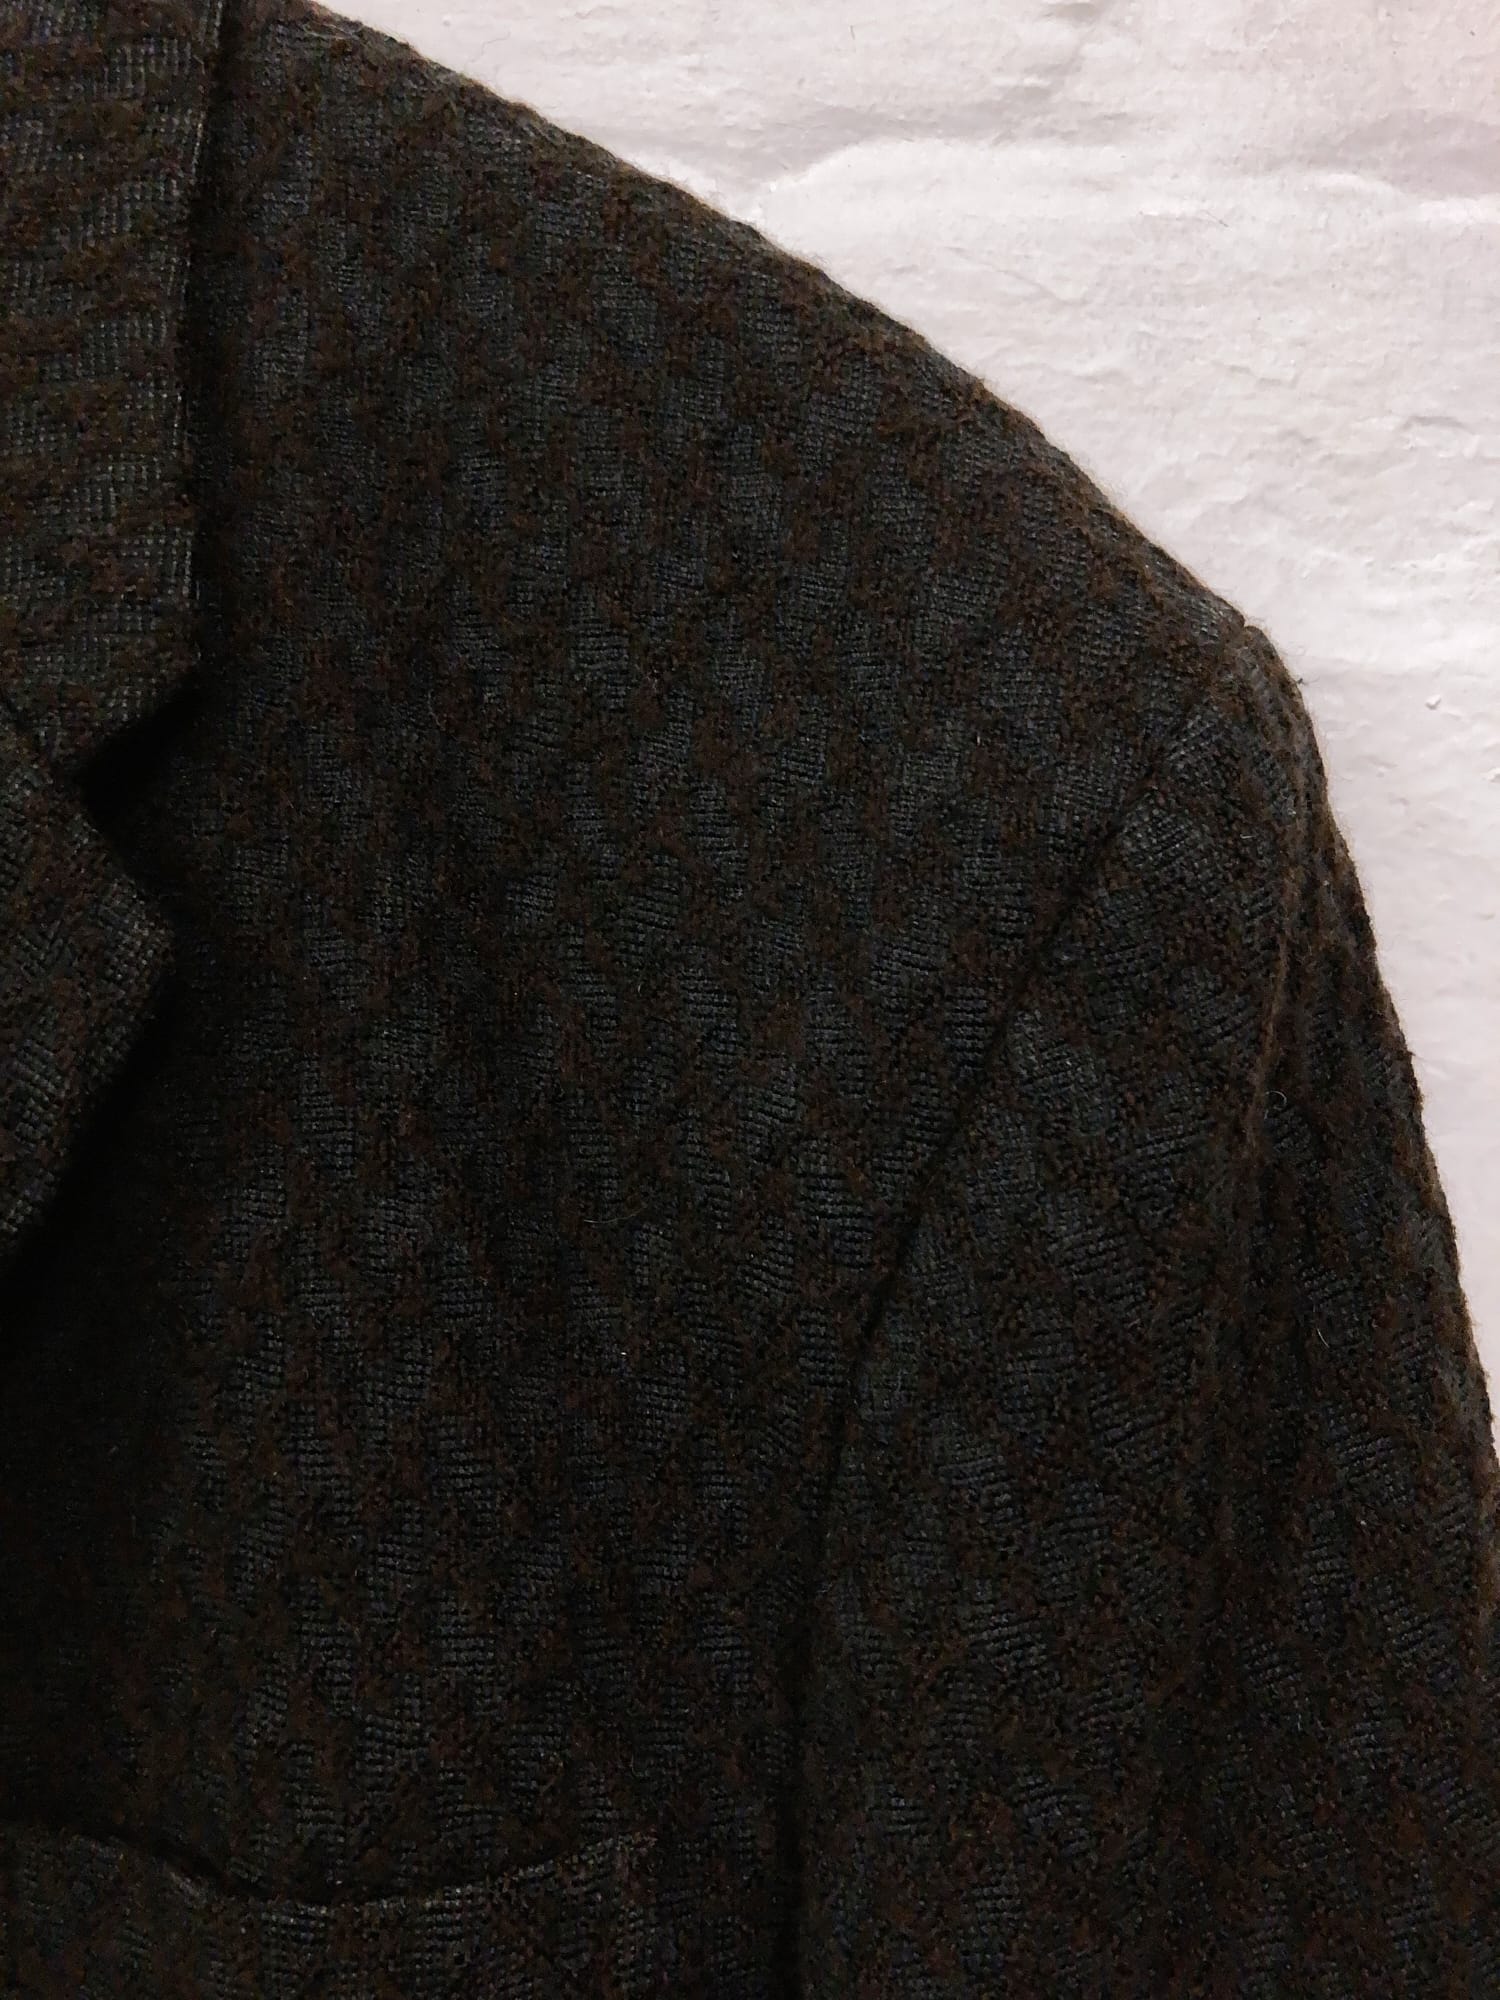 Arrston Volaju Kohshin Satoh 1980s brown 3D textured wool four button blazer